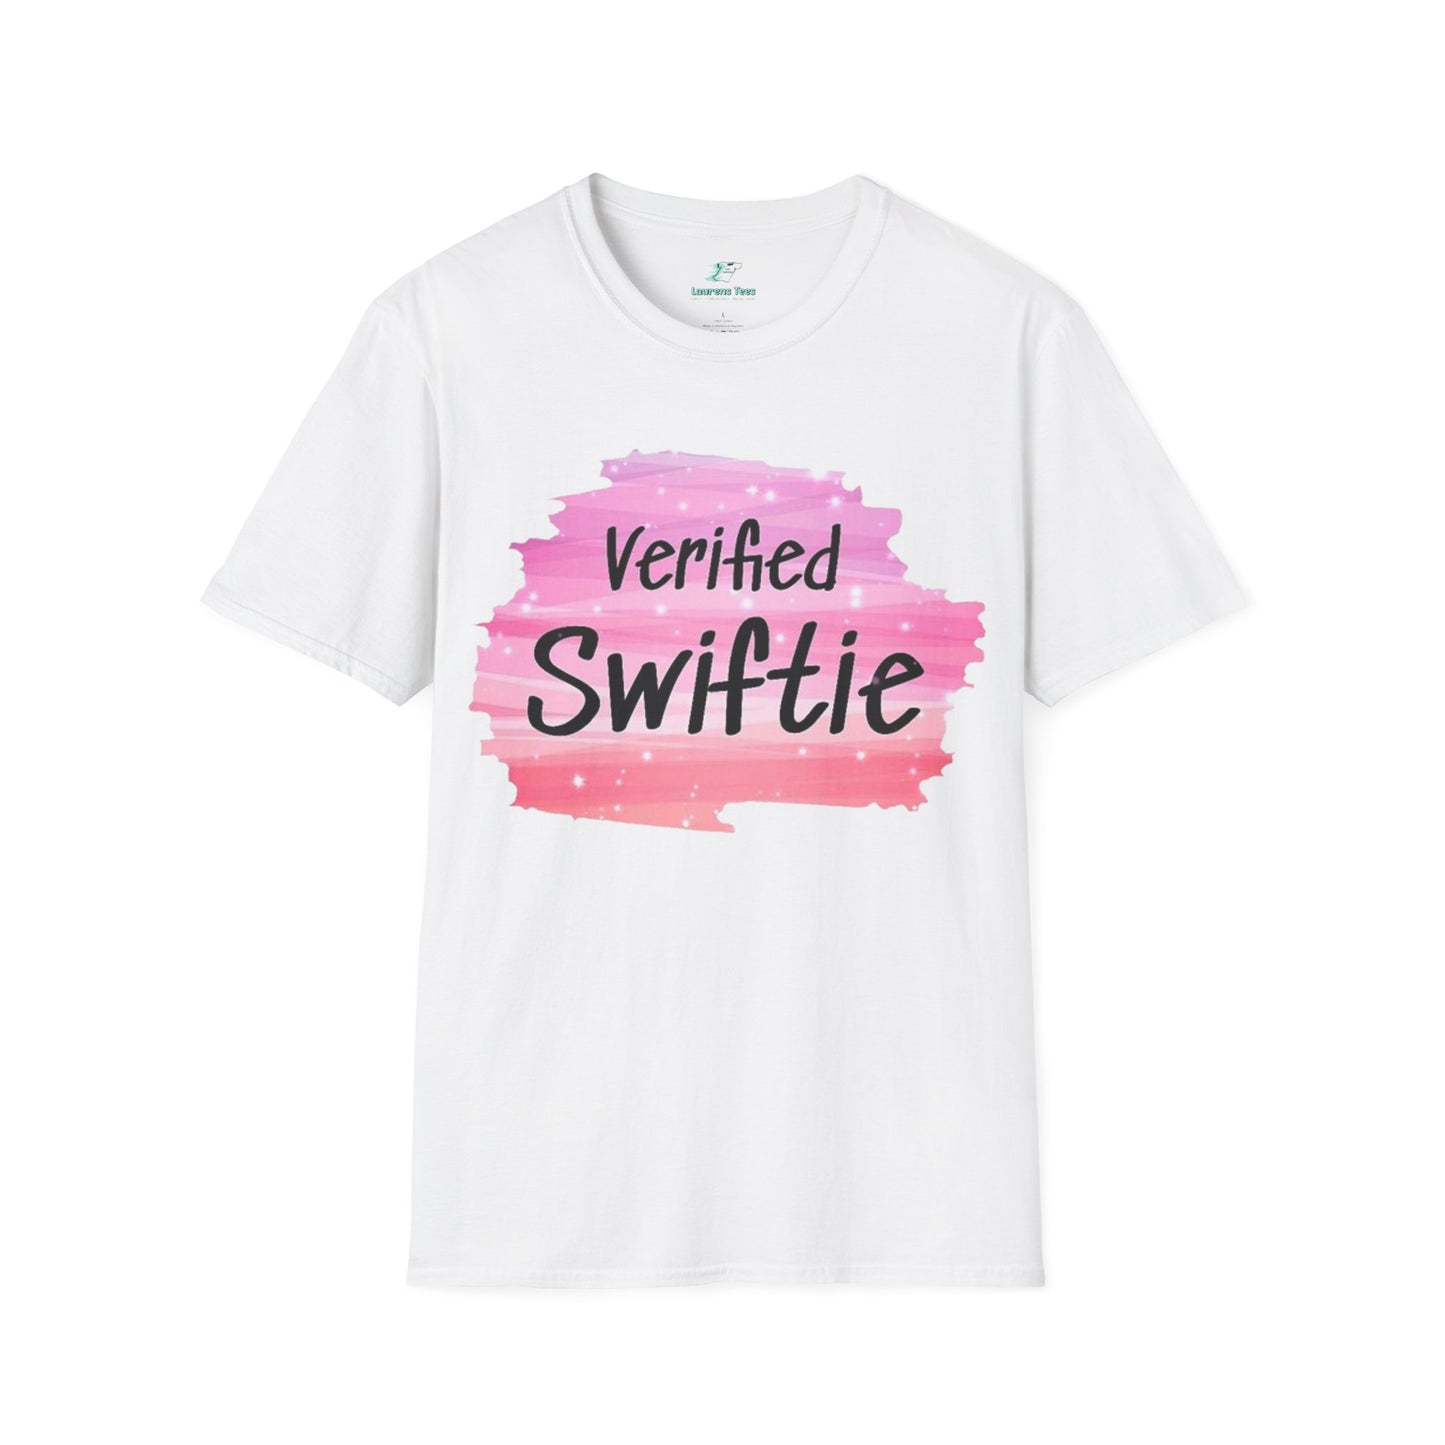 Verified Swiftie - Unisex Softstyle T-Shirt